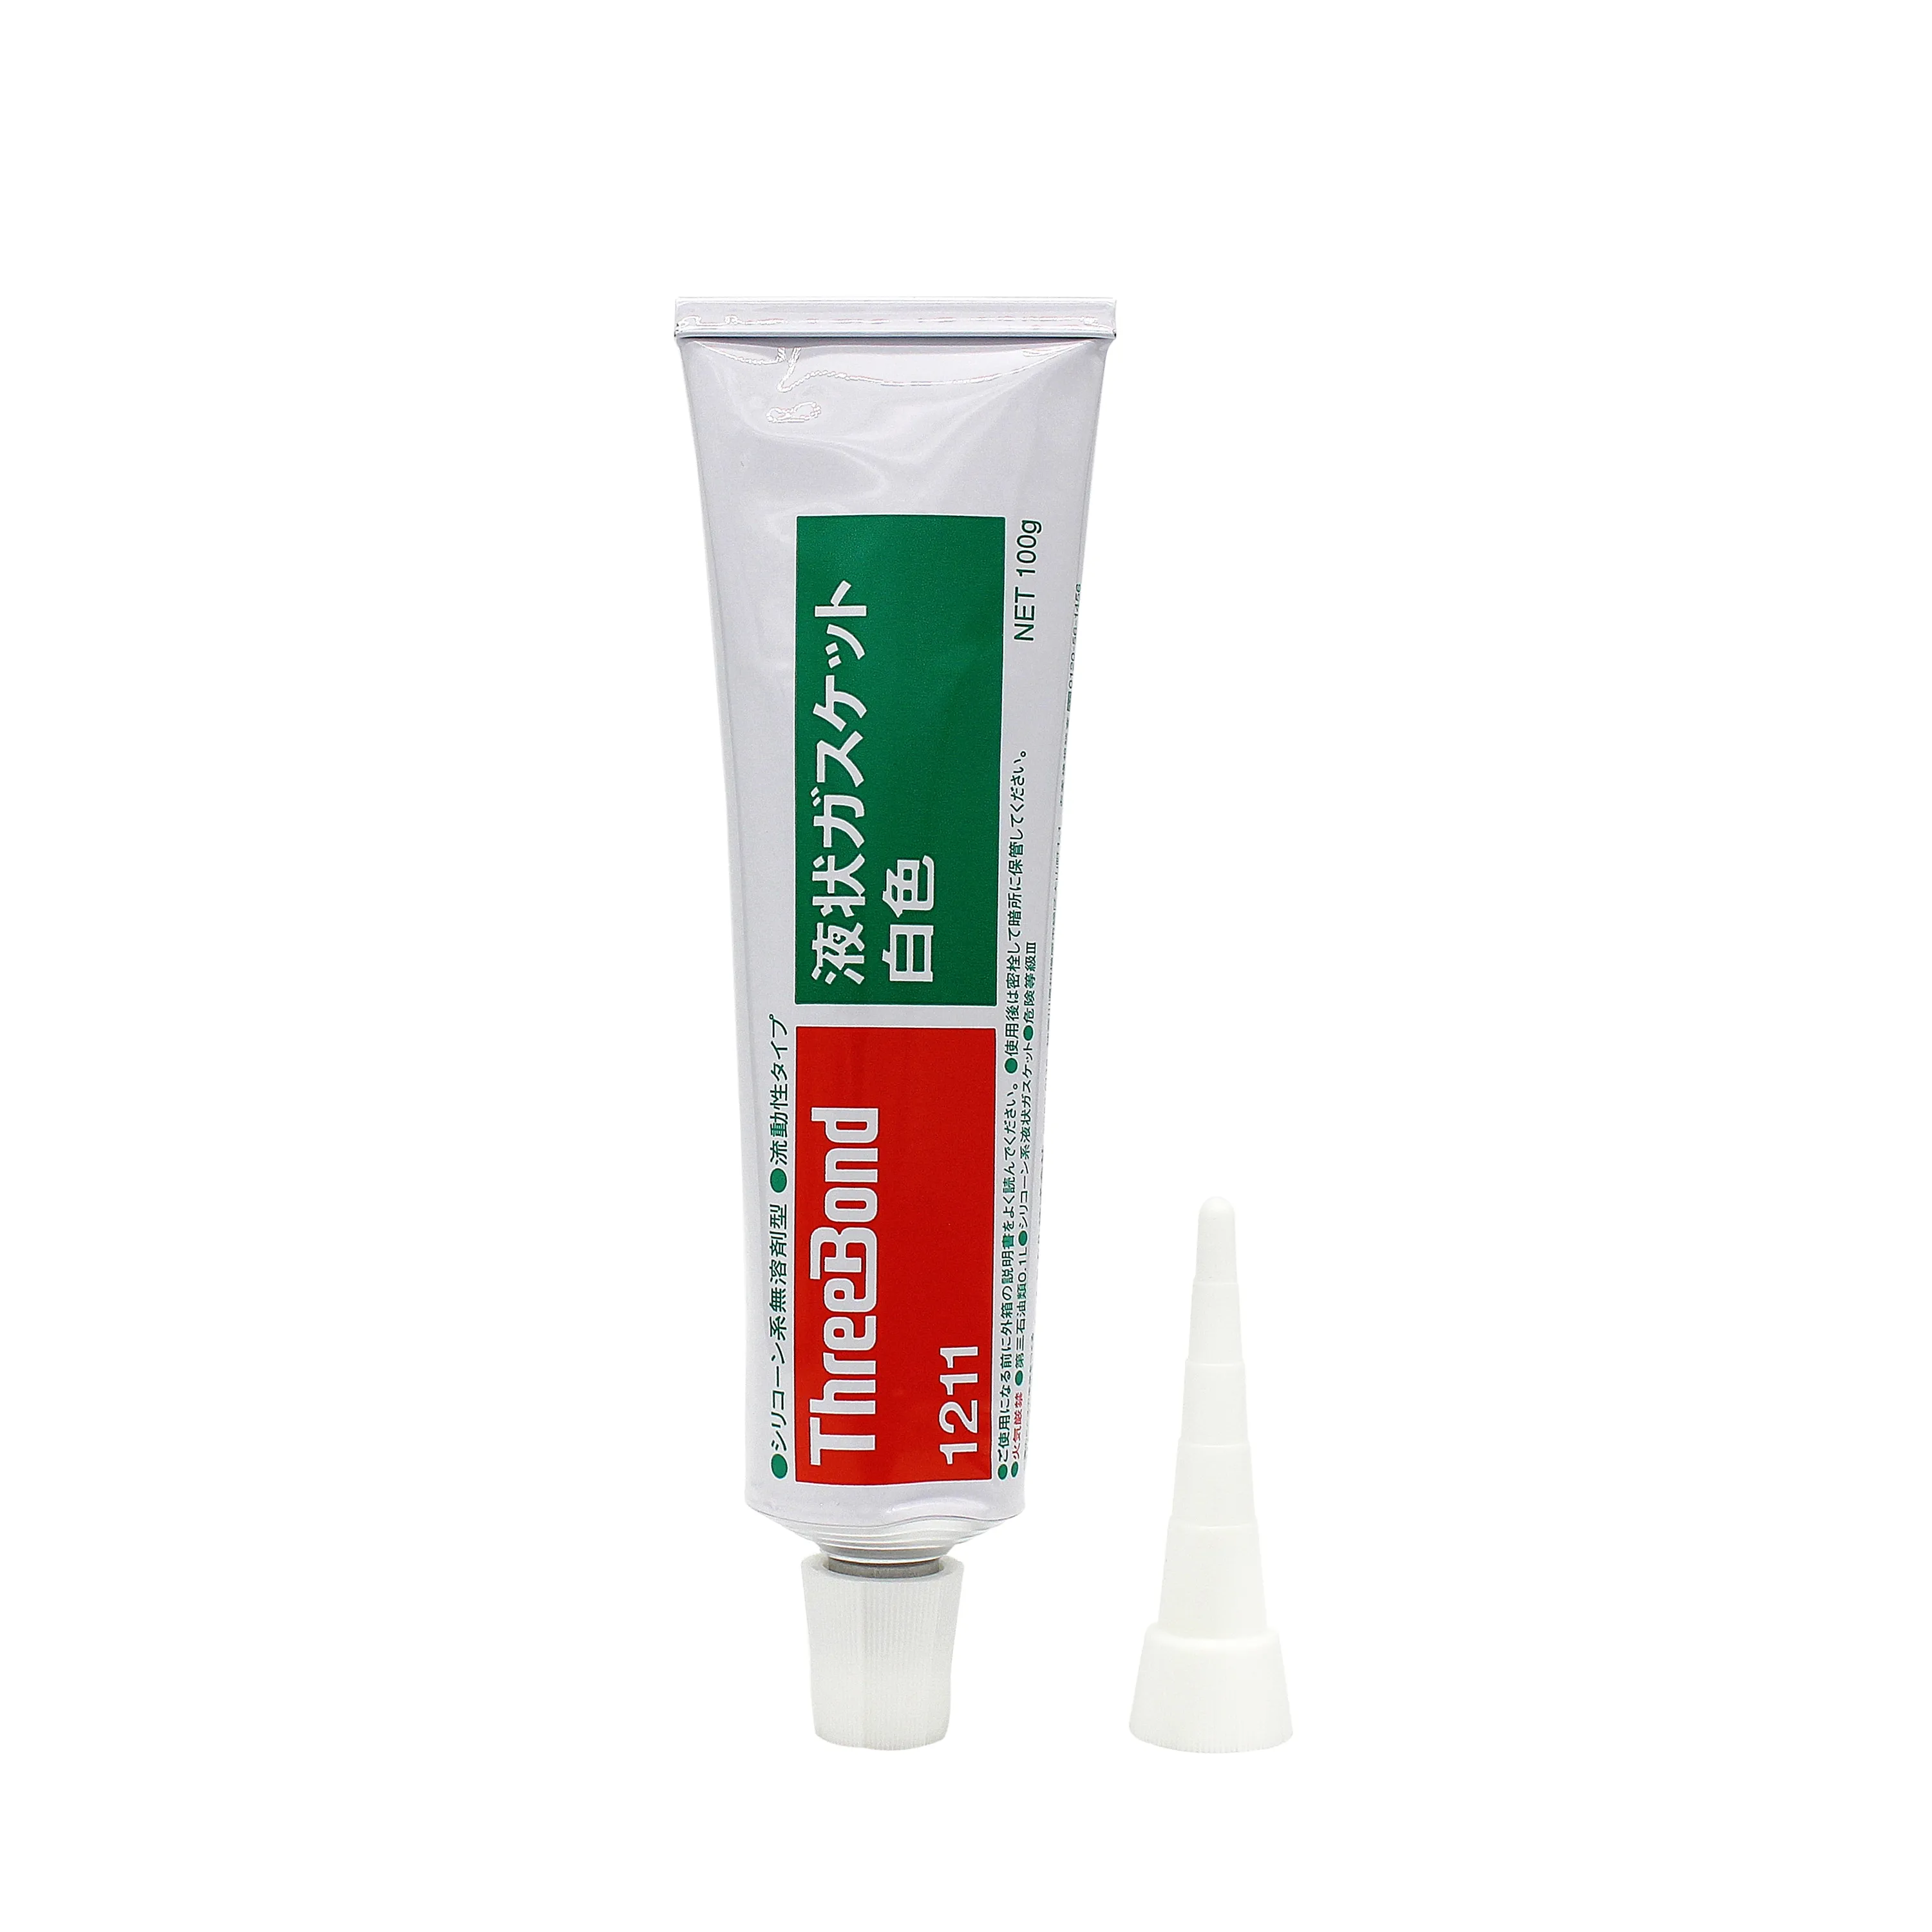 Threebond 1211 100G Oil Resistant Liquid White Gasket Adhesive